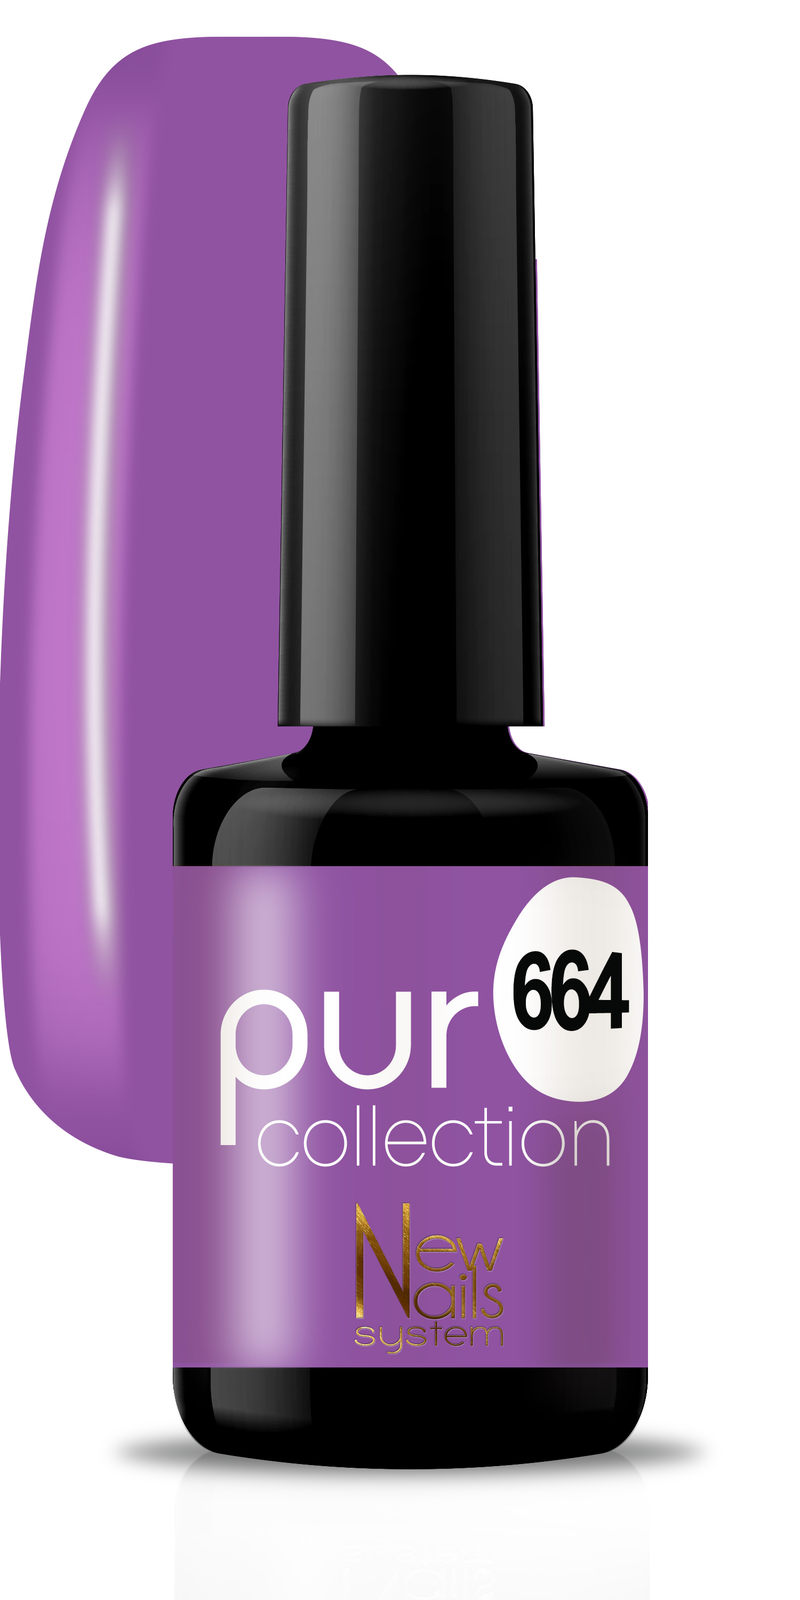 Puro collection Peryvinkle 664 polish gel 5ml